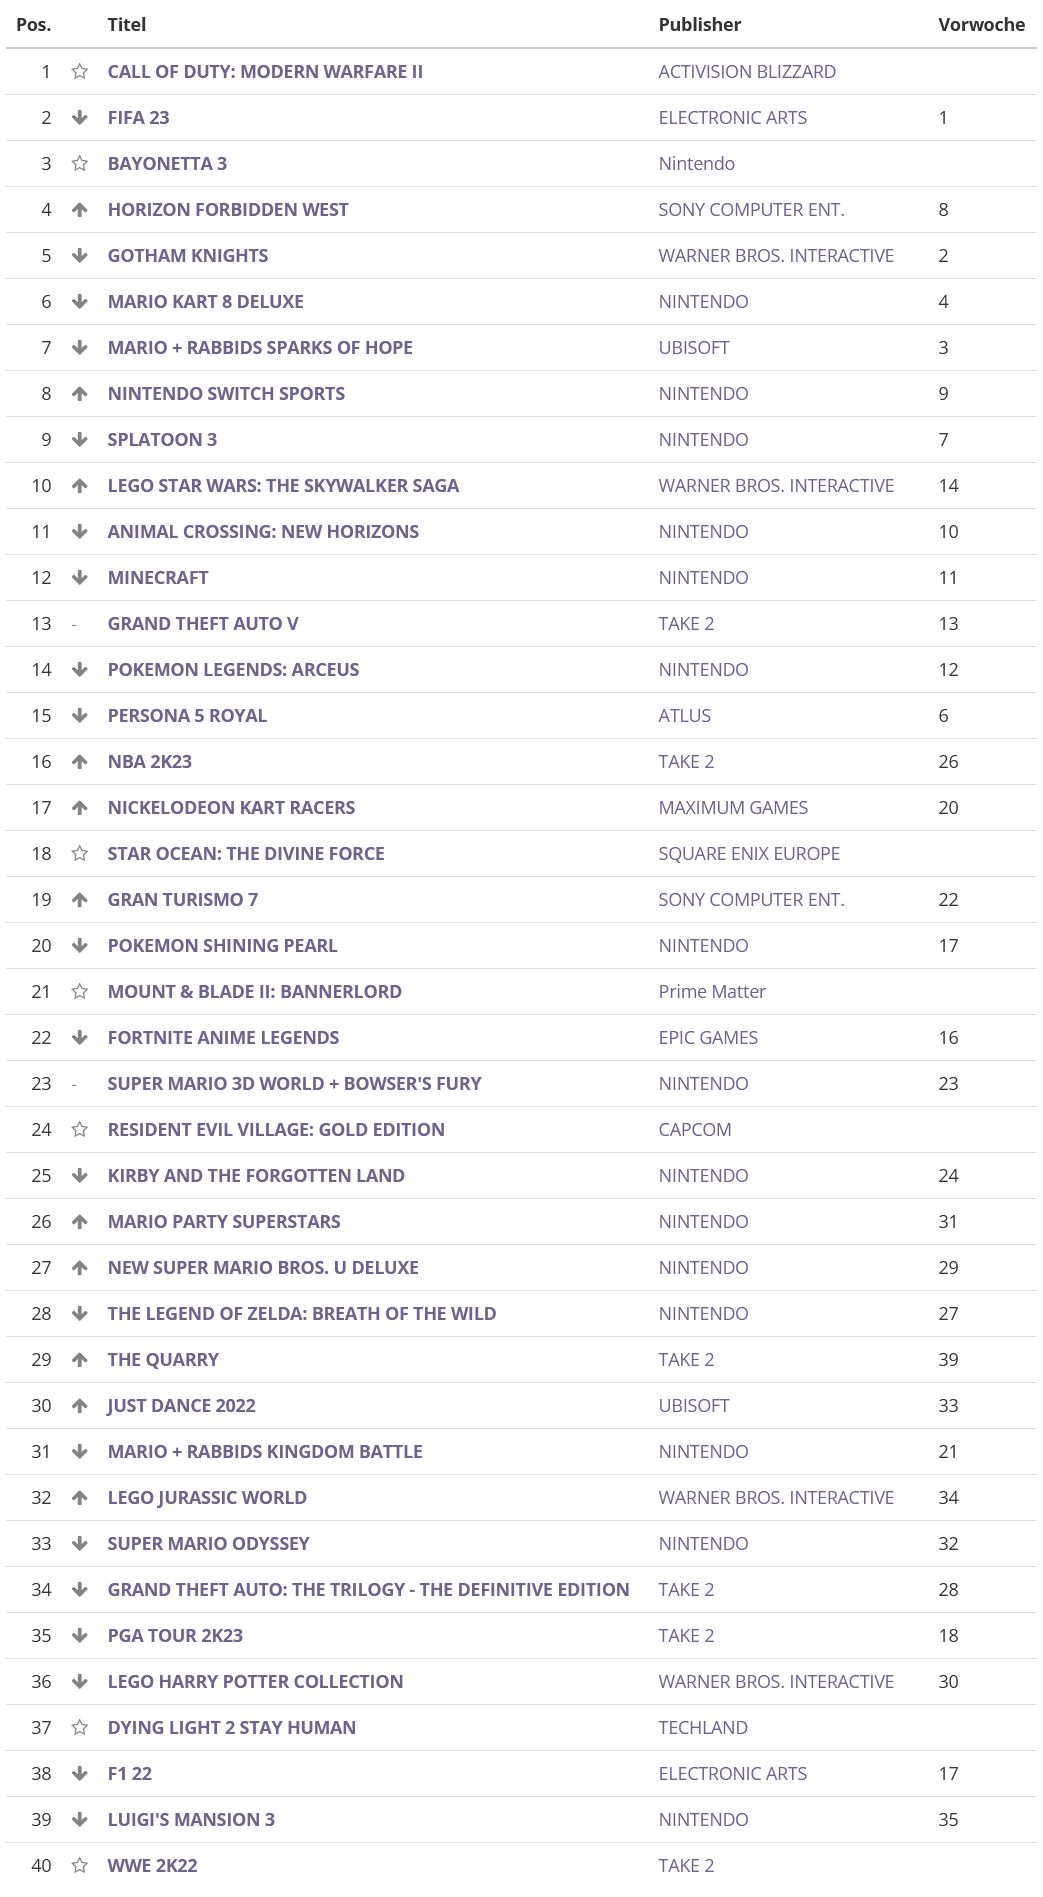 UK Top 40 ENTERTAINMENT SOFTWARE ALLE PREISE 24.10.22 bis 29.10.22